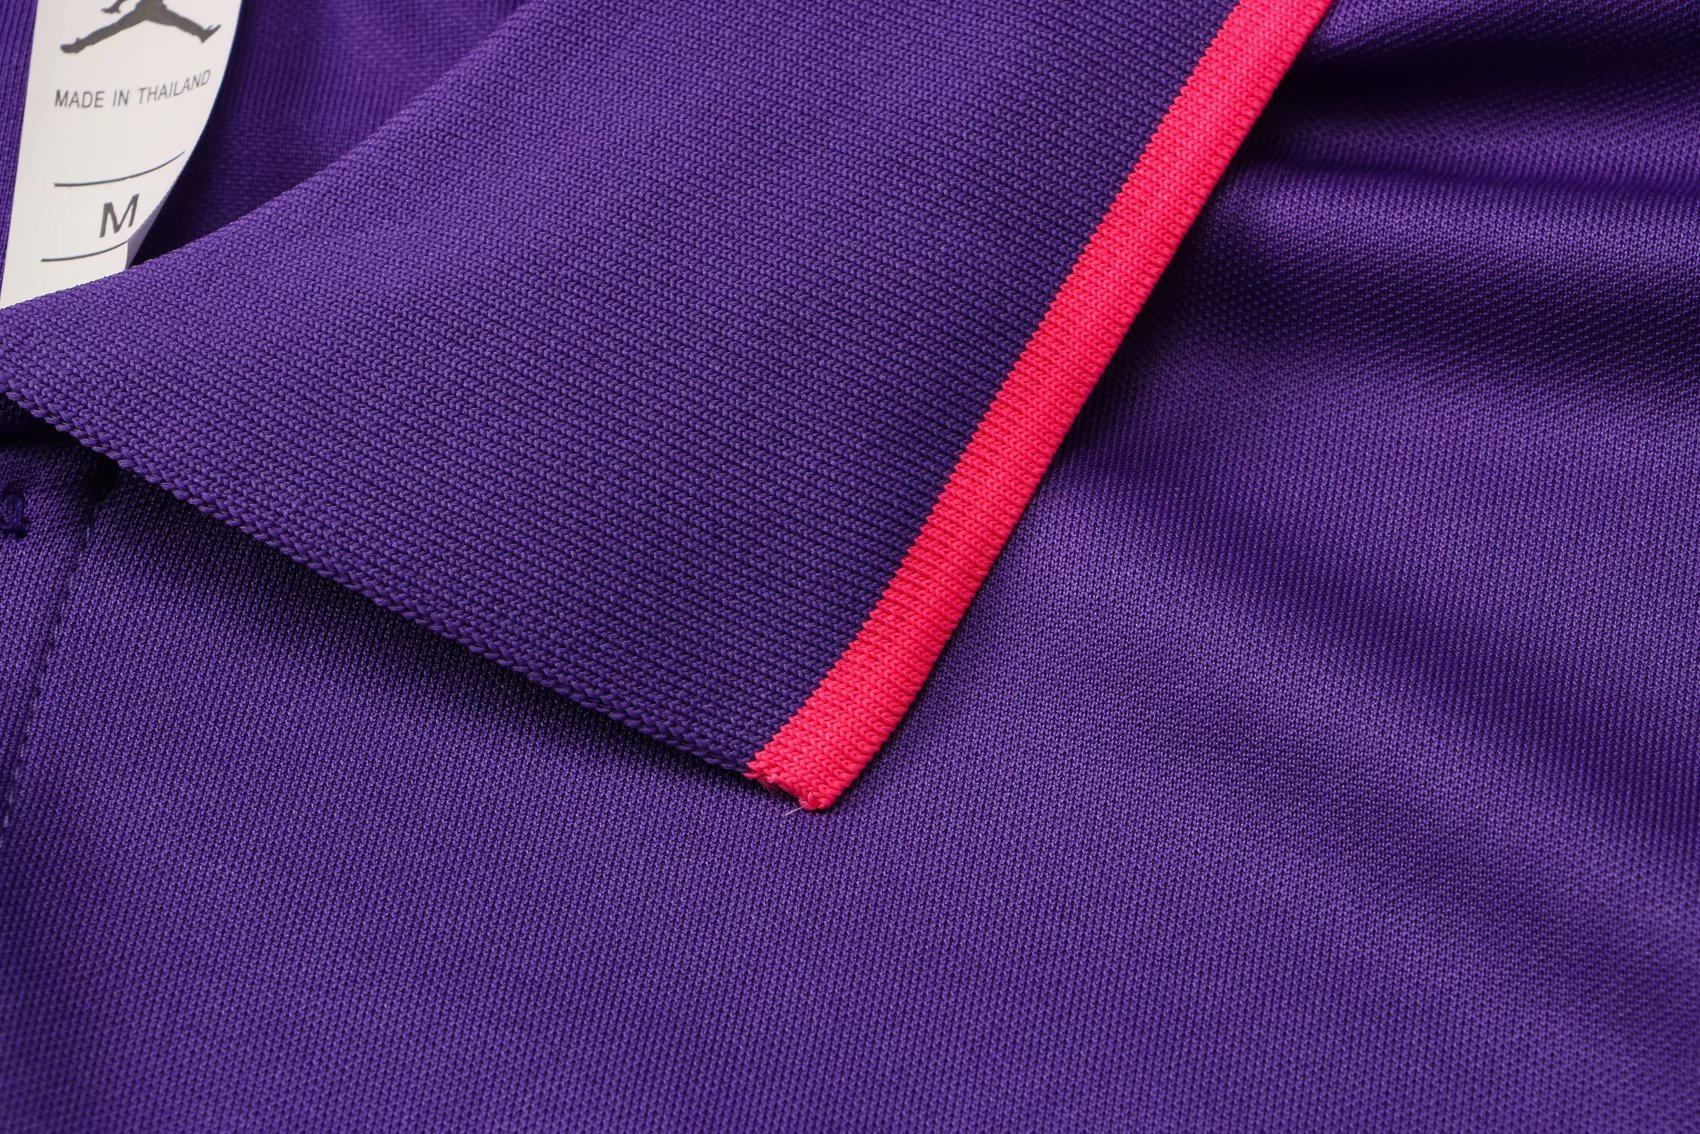 2021/22 PSG x Jordan Purple Soccer Polo Jersey Mens